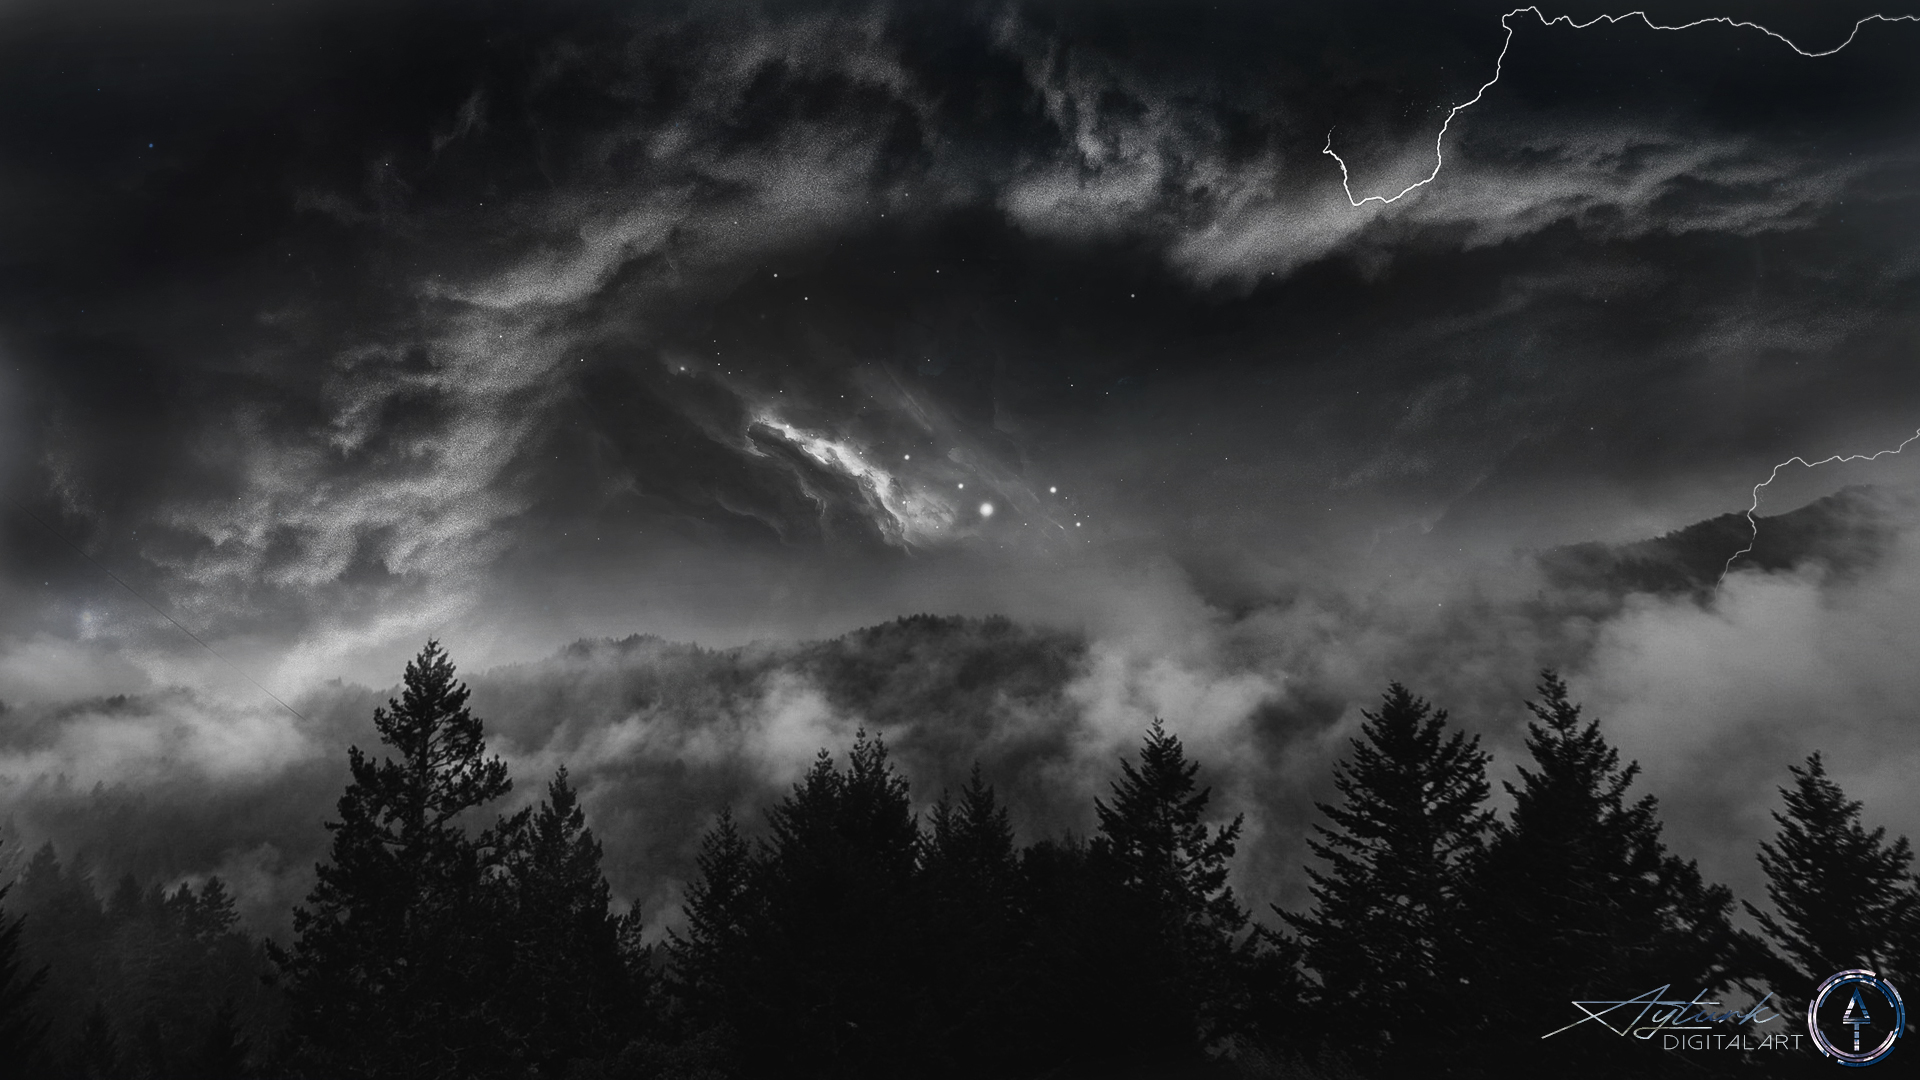 General 1920x1080 storm lightning nature digital art photo manipulation landscape forest artwork mountains gray